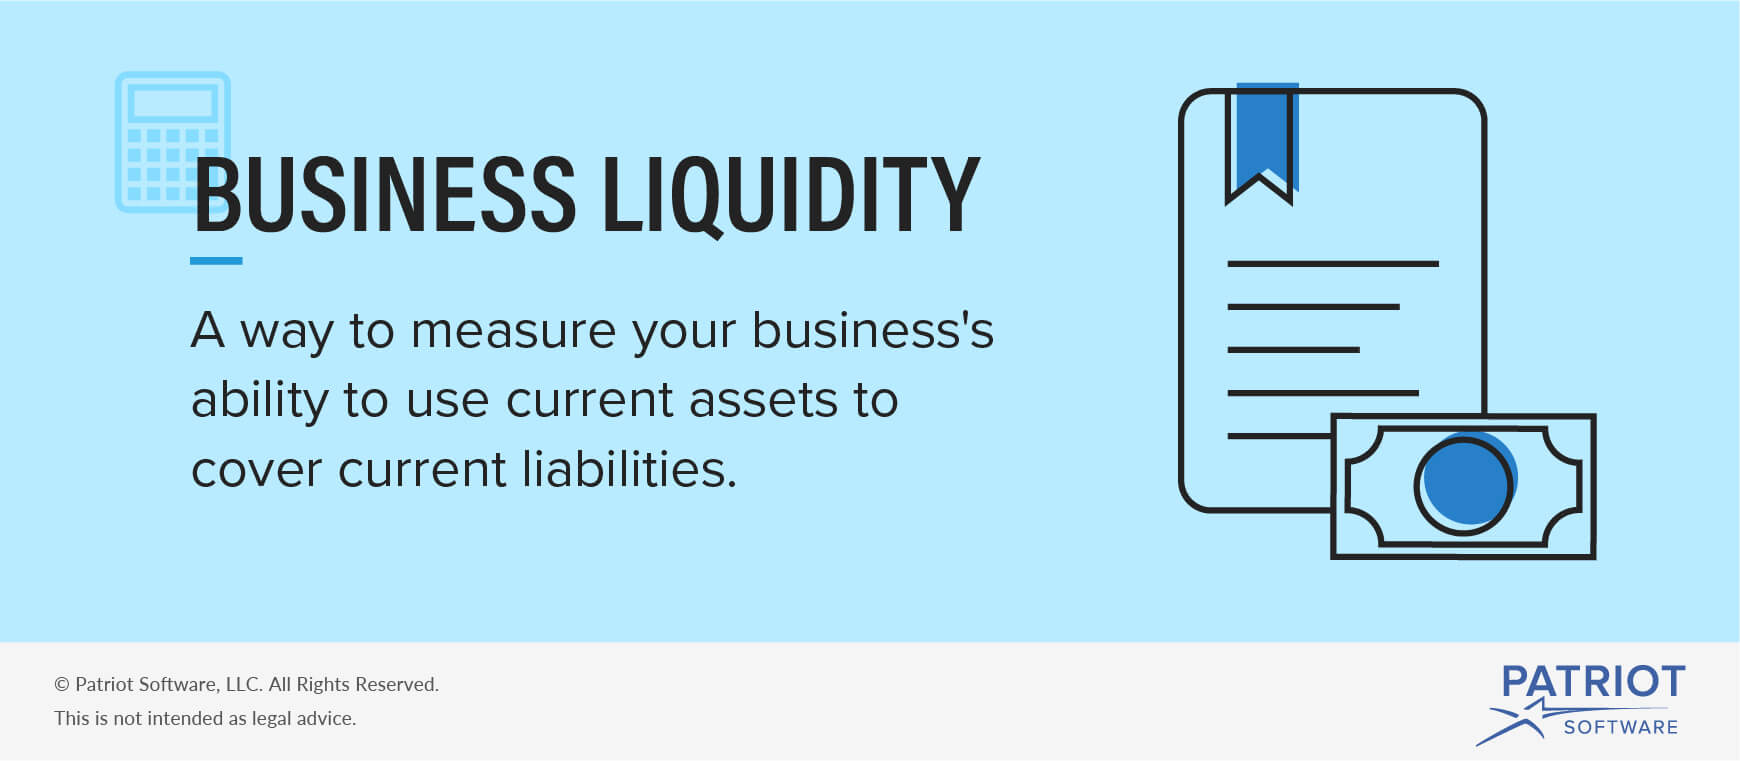 Business Liquidity Definition Graphic